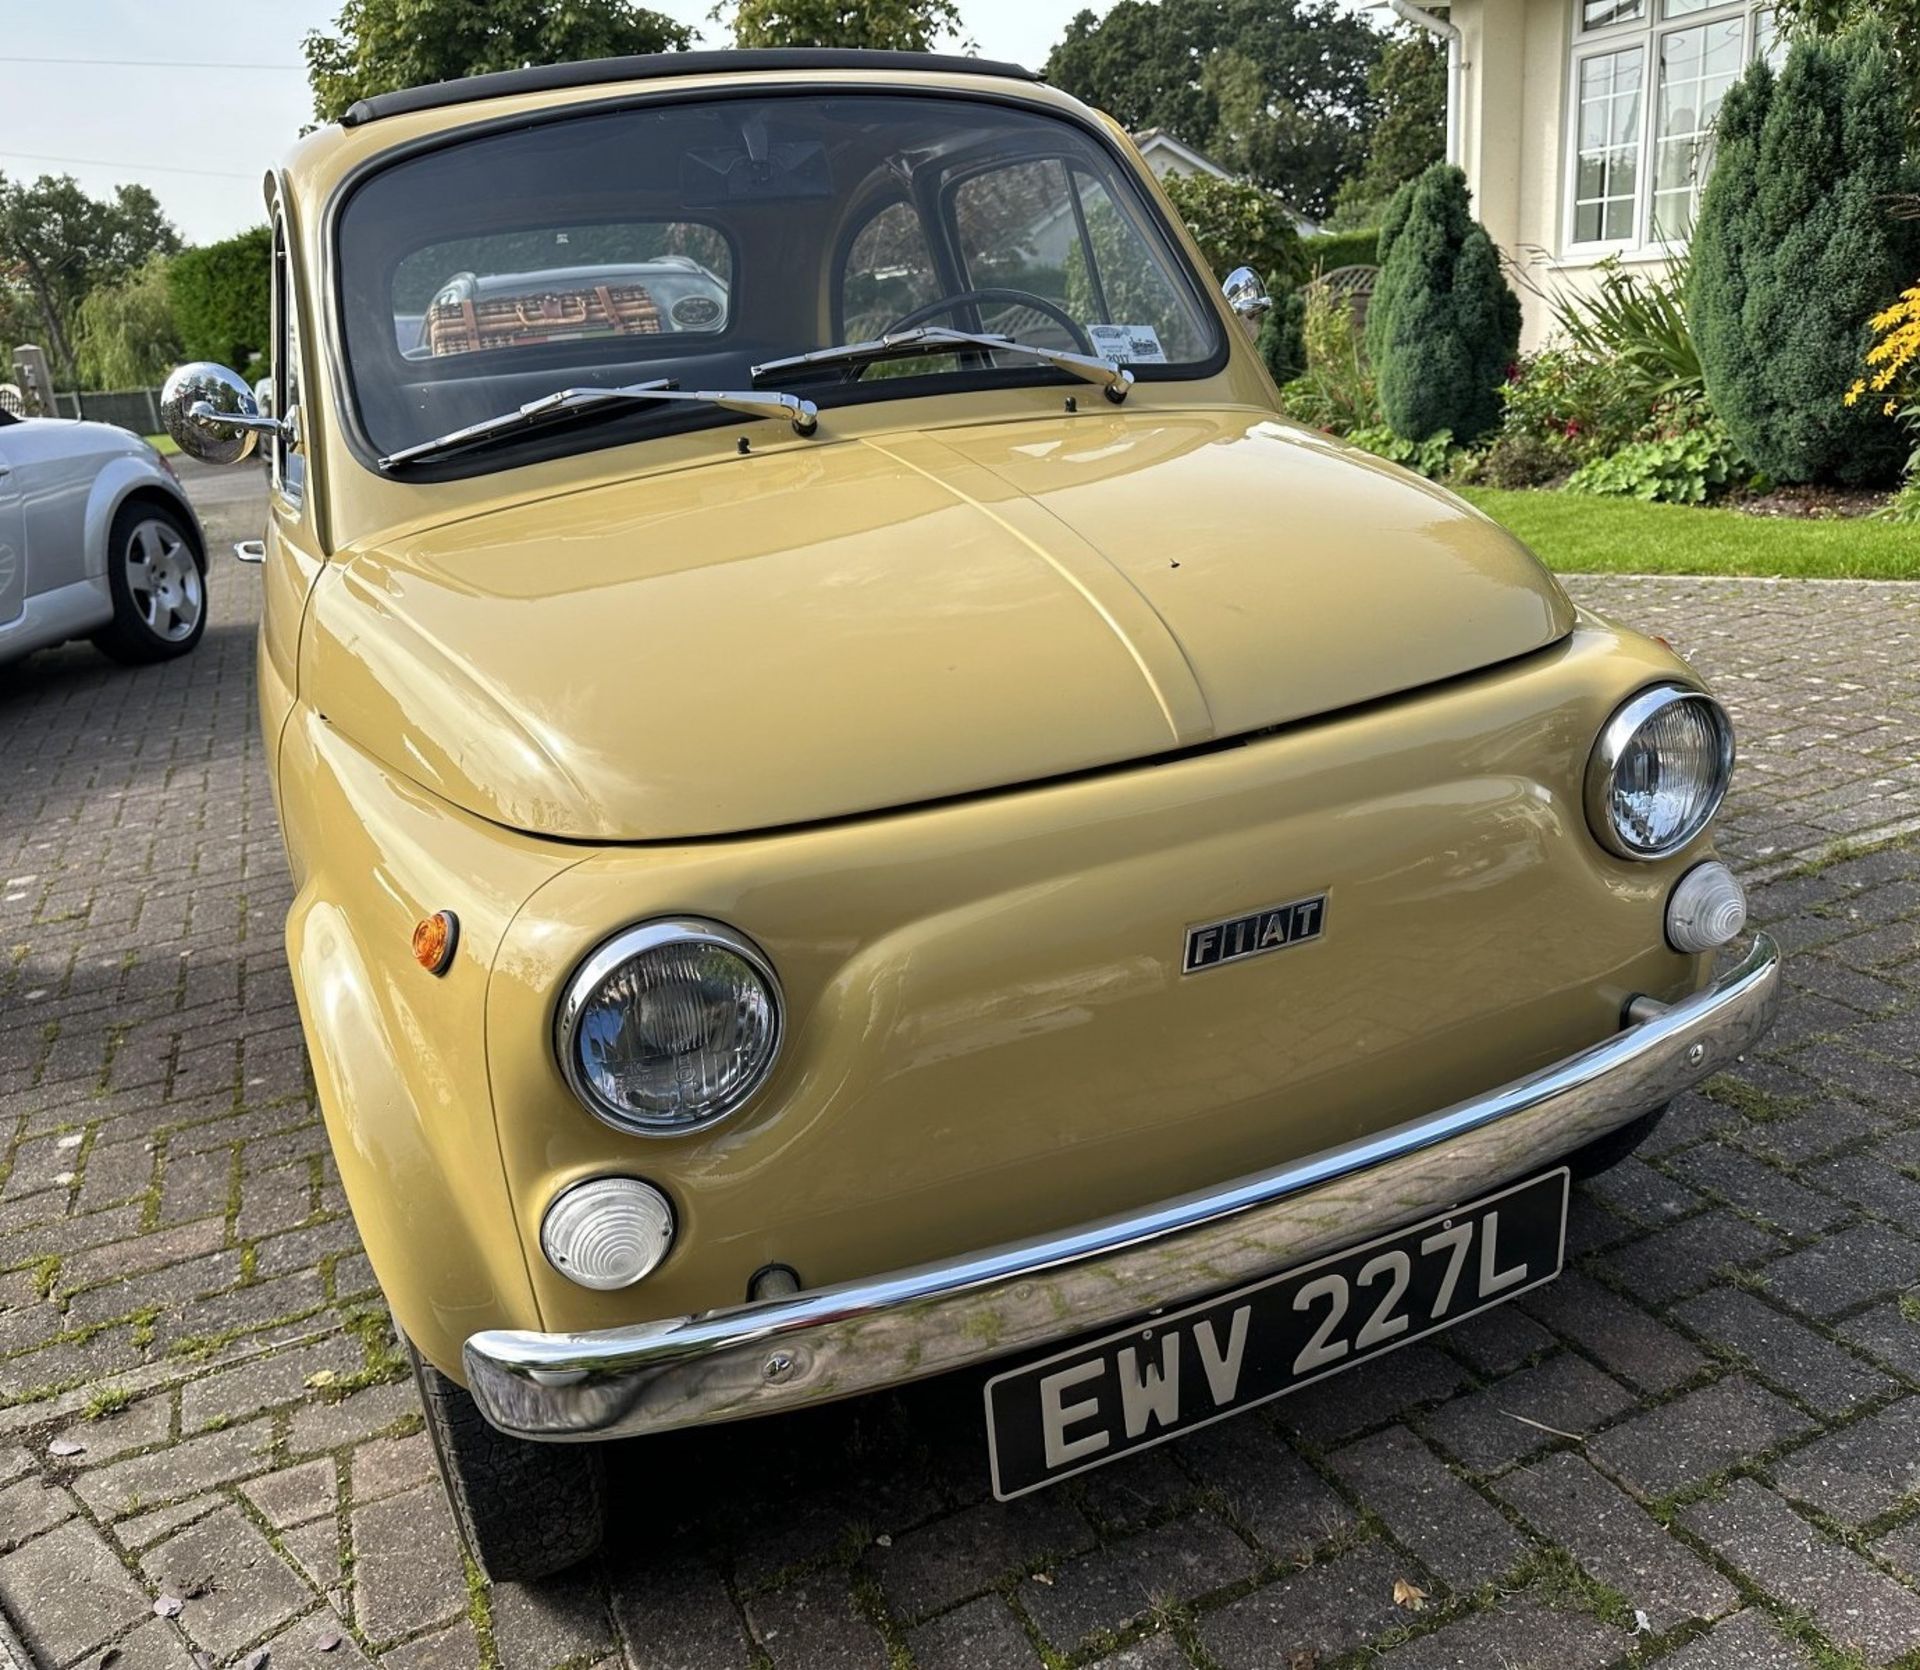 1973 Fiat 500F Registration number EWV 227L Chassis number 110F5125653 Engine number 126A5000 - Image 4 of 51